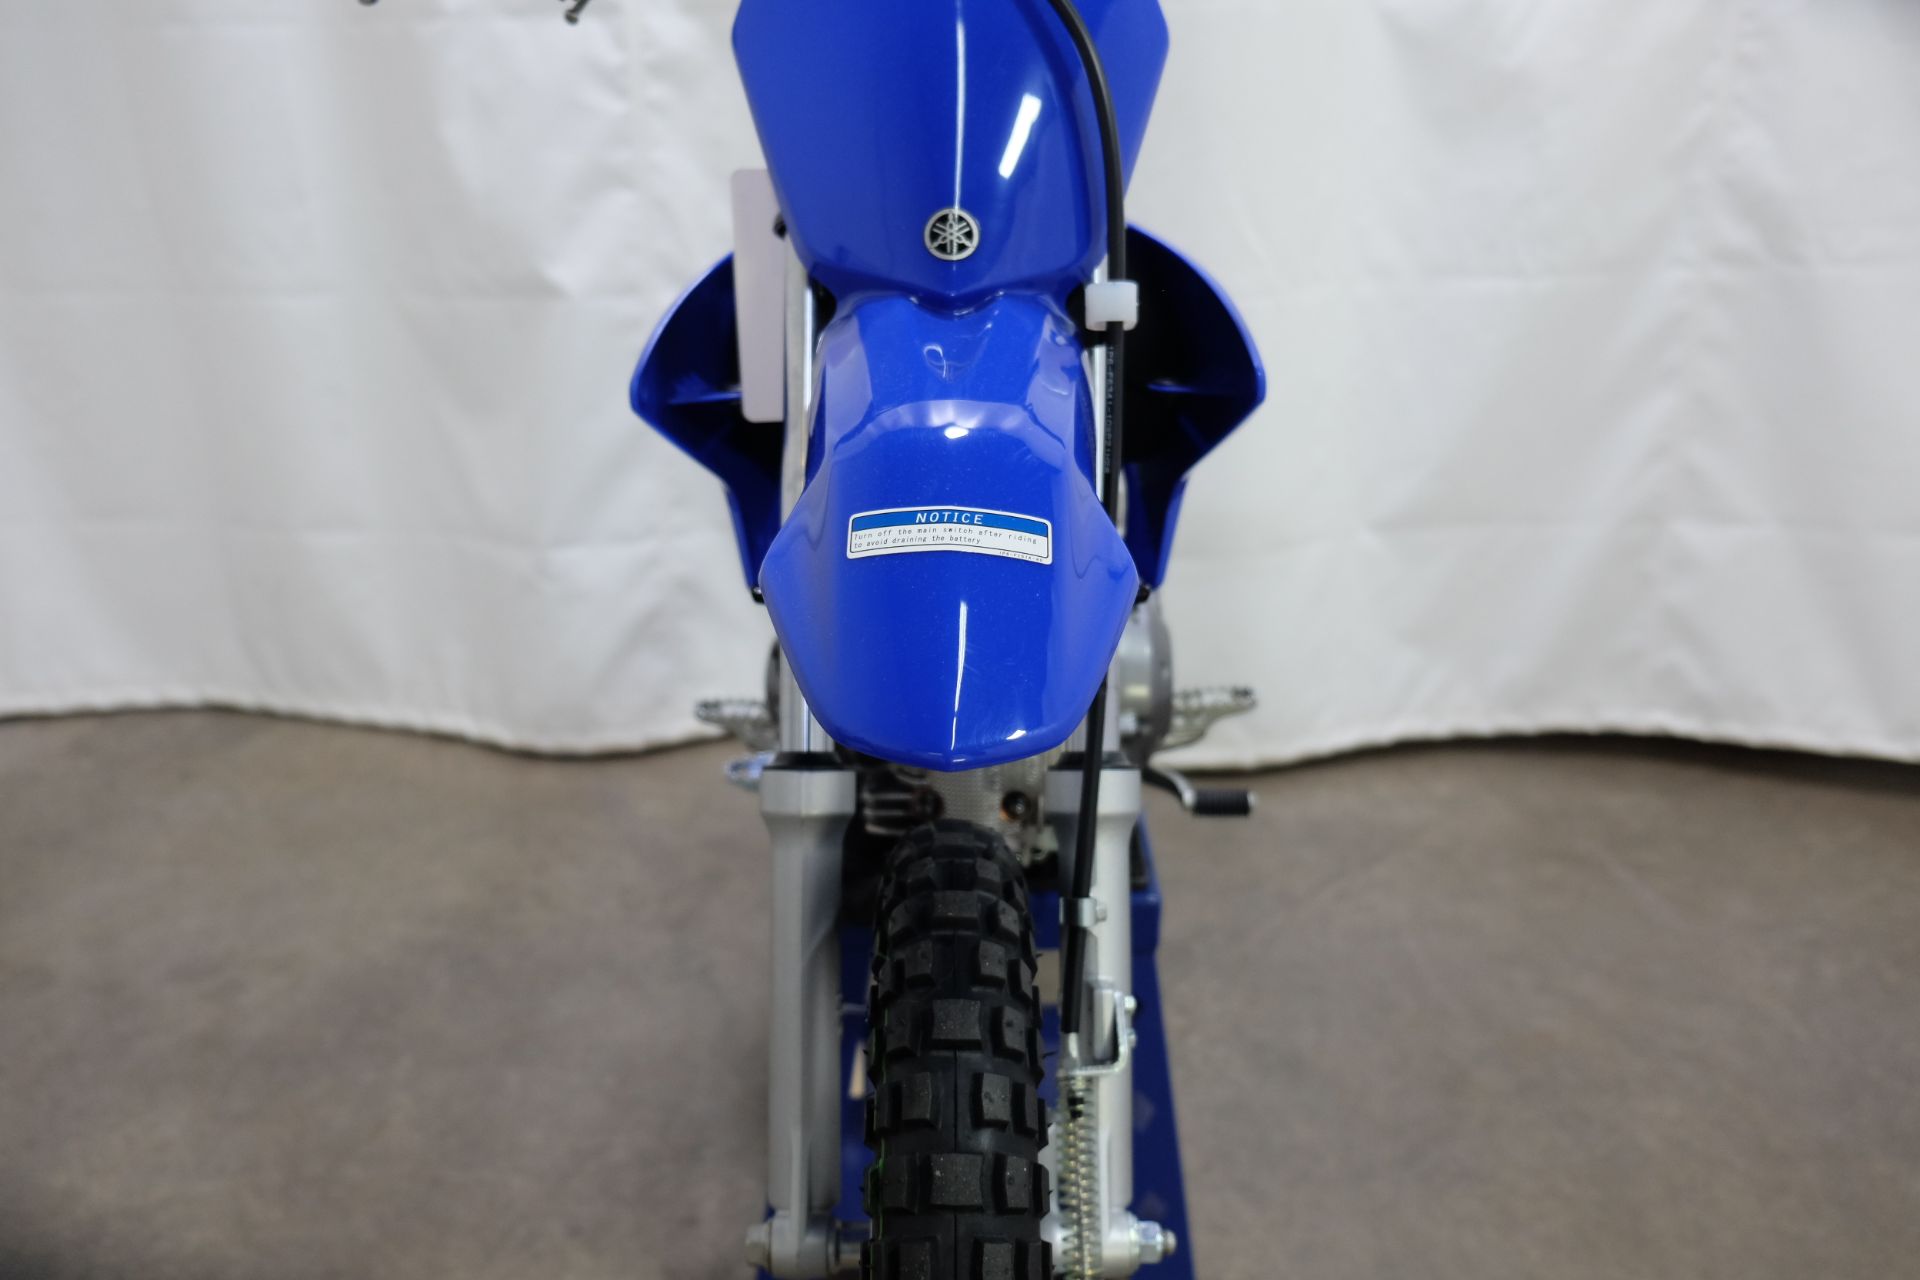 2022 Yamaha TT-R50E in Eden Prairie, Minnesota - Photo 21